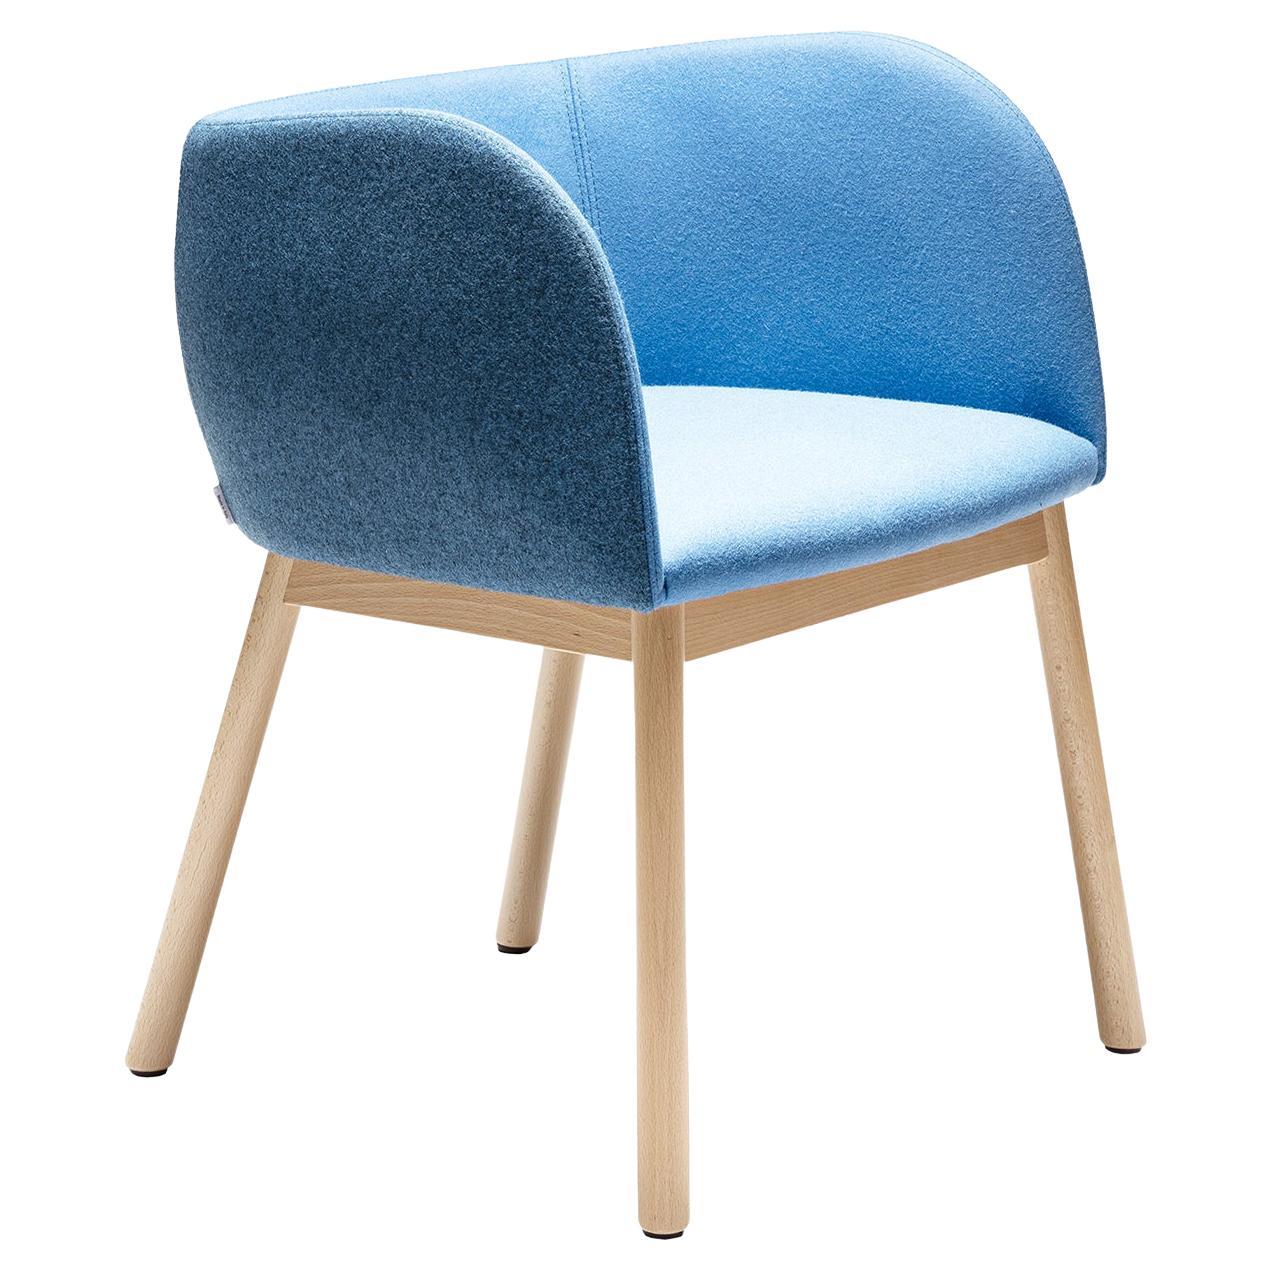 Mousse SP Blue Chair by Tommaso Caldera